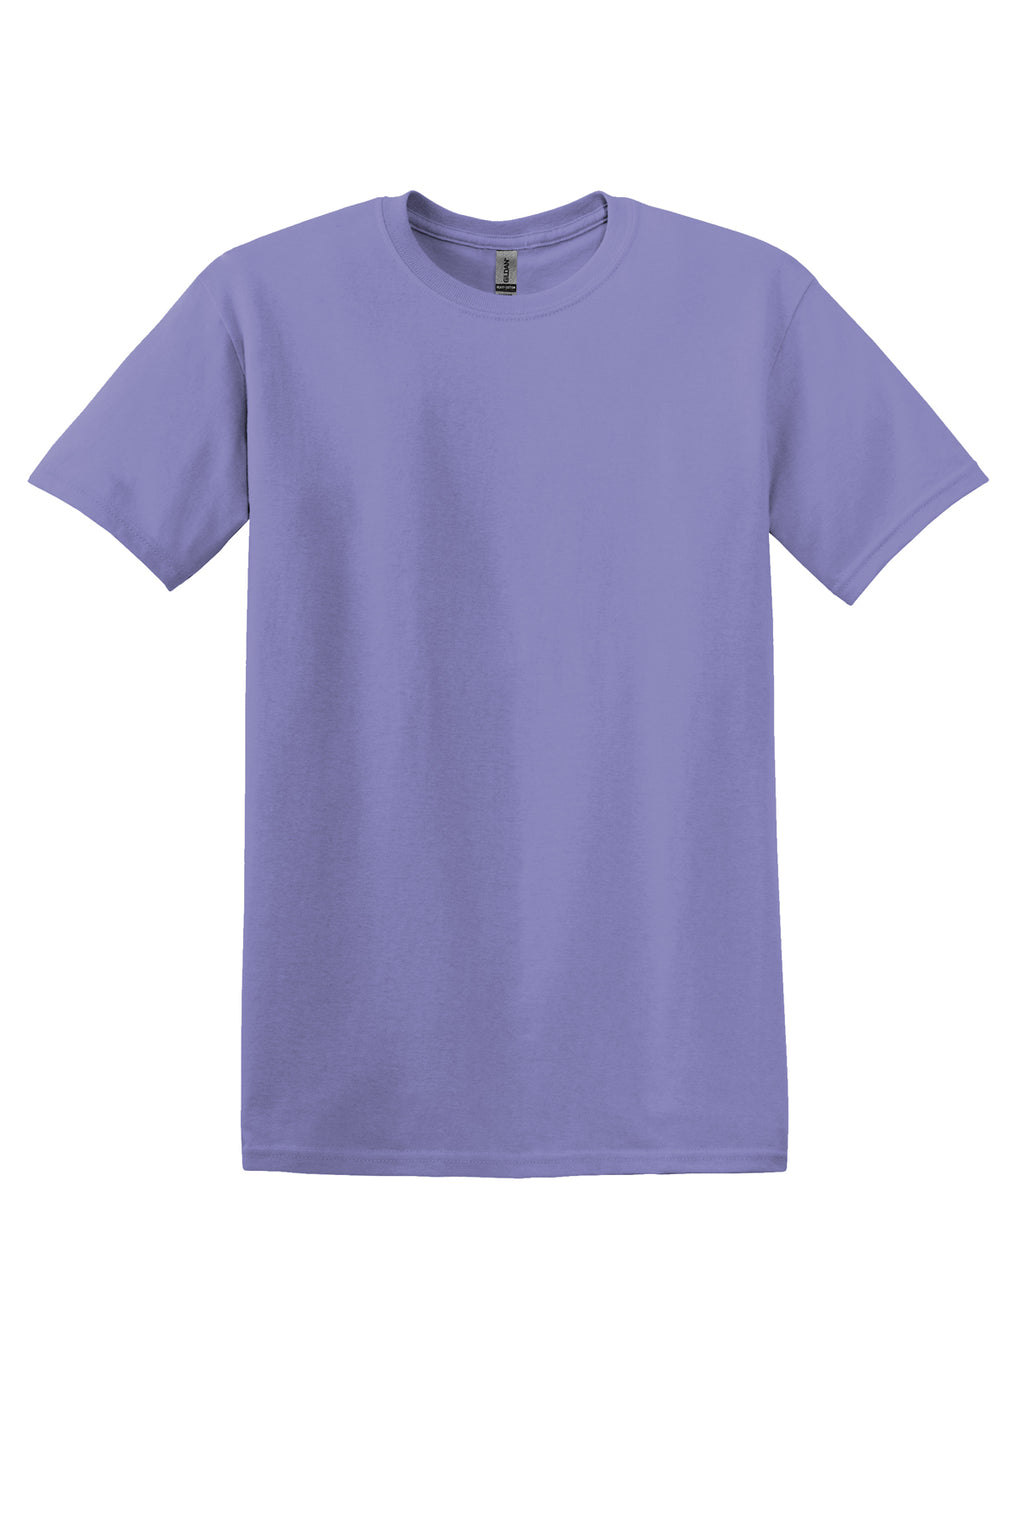 Gildan Mens/Unisex S/S Sleeve Shirts Violet